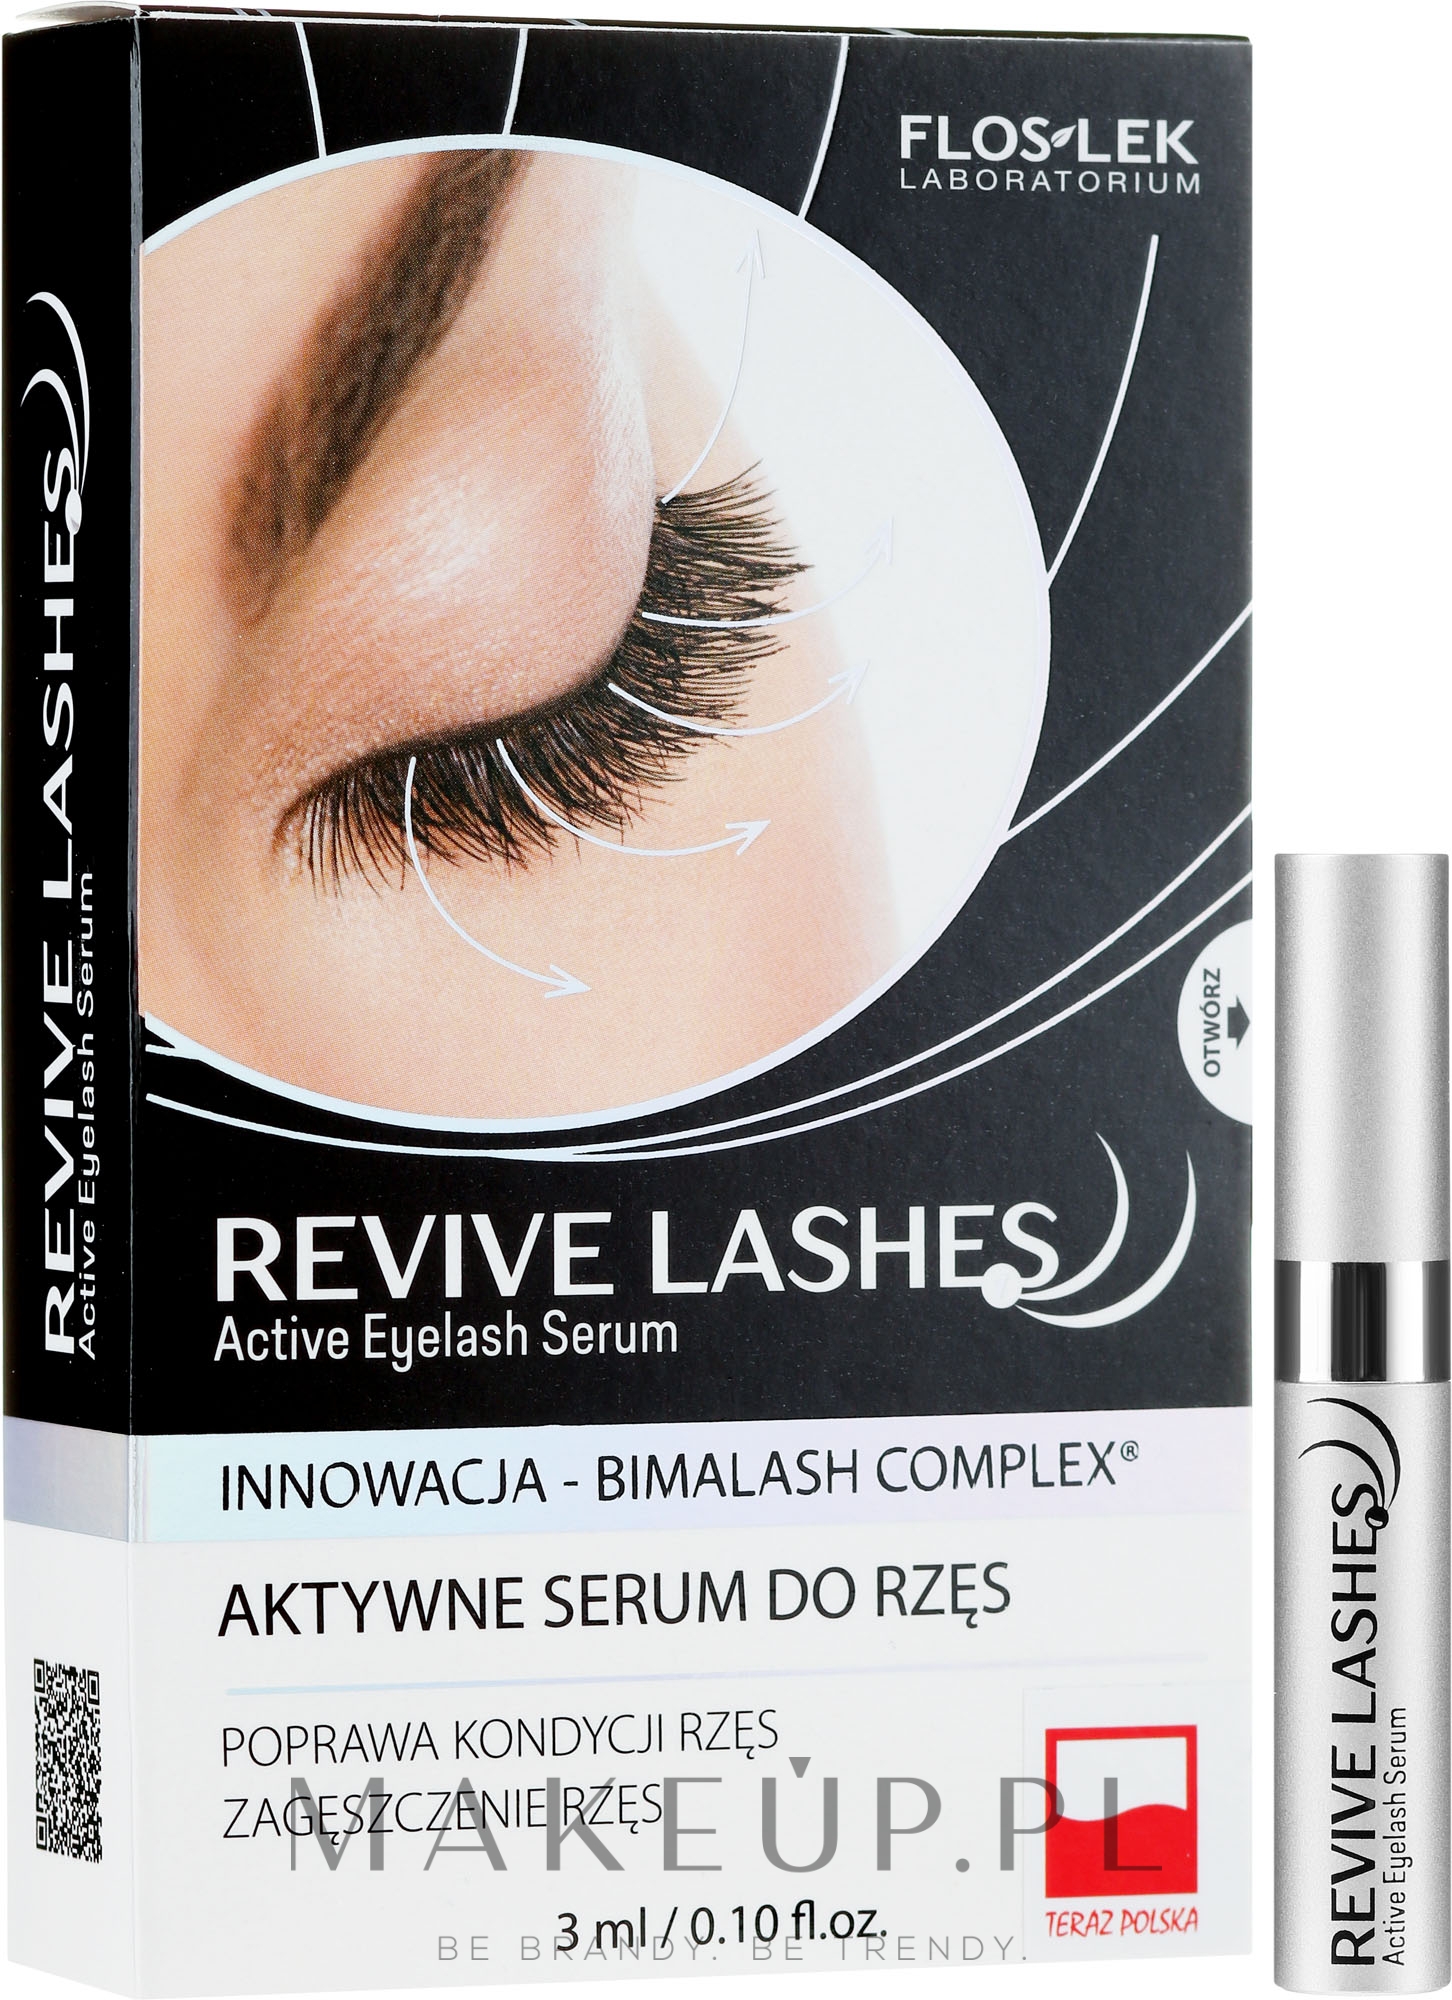 Stymulujące serum do rzęs - Floslek Revive Lashes Eyelash Enhancing Serum — Zdjęcie 3 ml